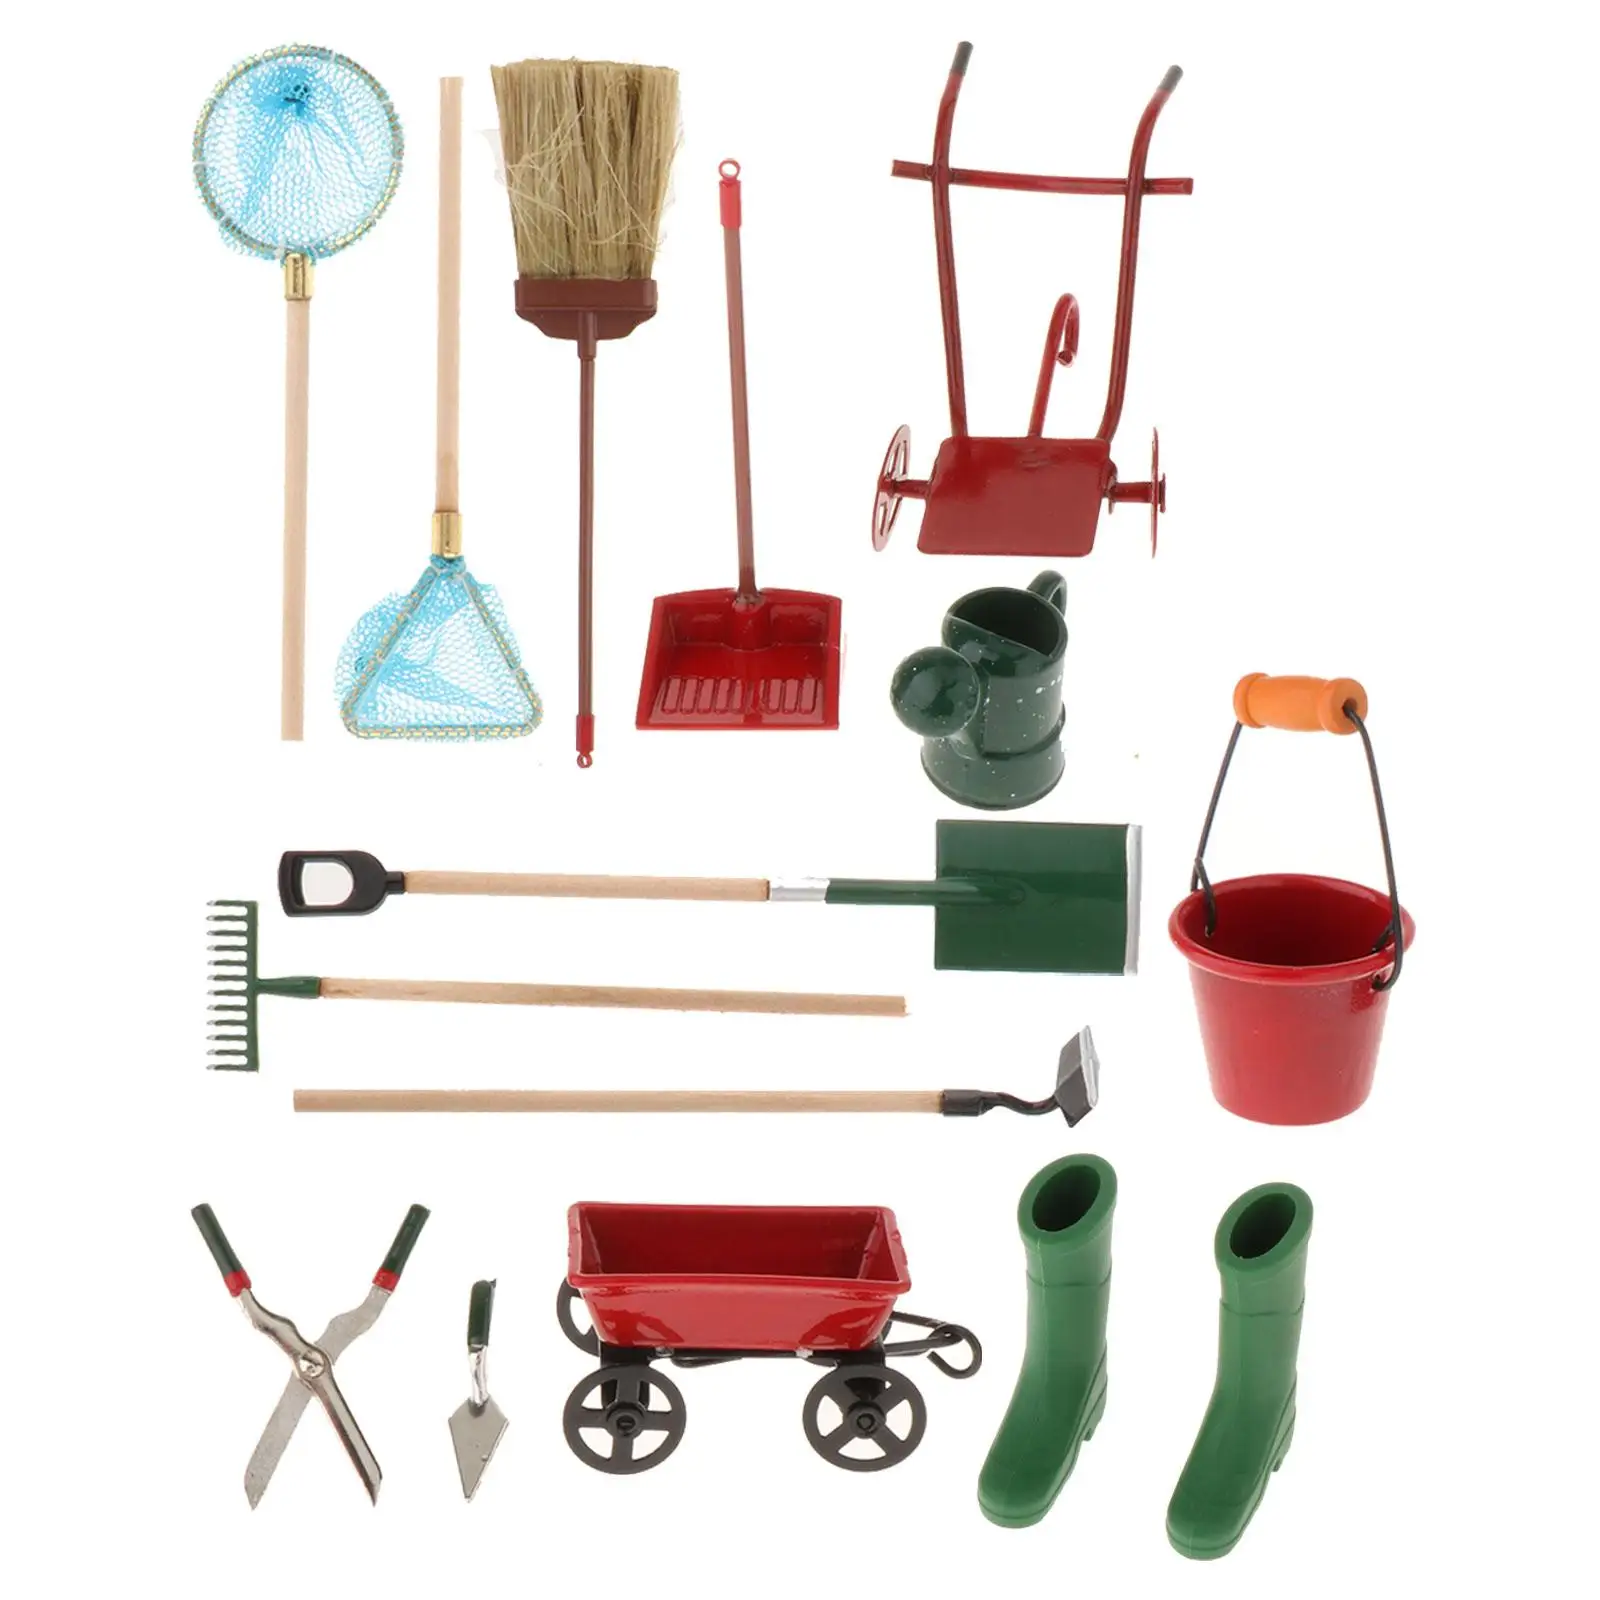 14x 1:12 Simulation Gardening Tools, Kids Cleaning Toys Mini Ornament Garden Furniture Miniature Tool Miniature Garden Tools,